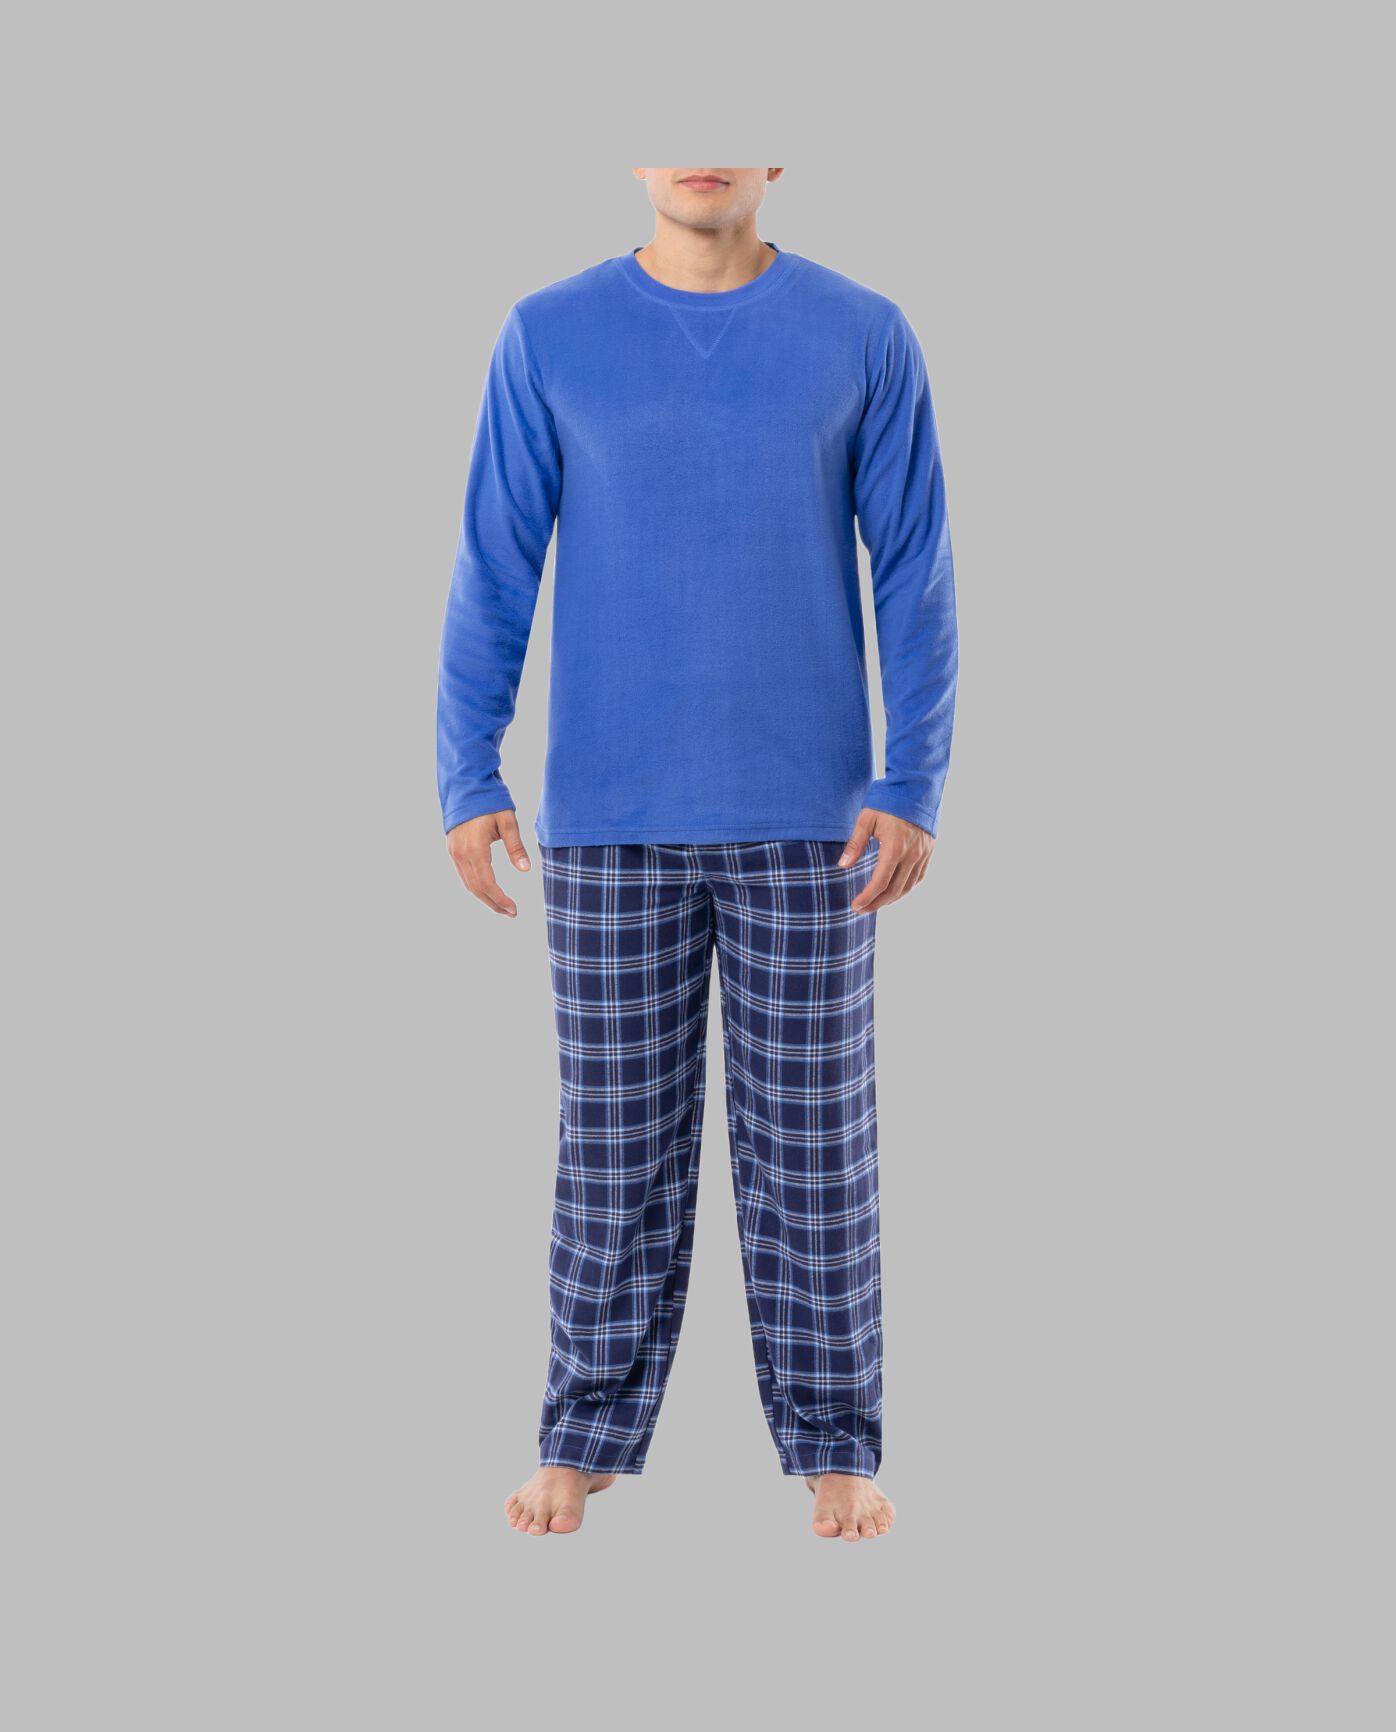 Fruit of the Loom Men's Long Sleeve Fleece Crew and Flannel Sleep Pant, 2 Piece Set BLUE